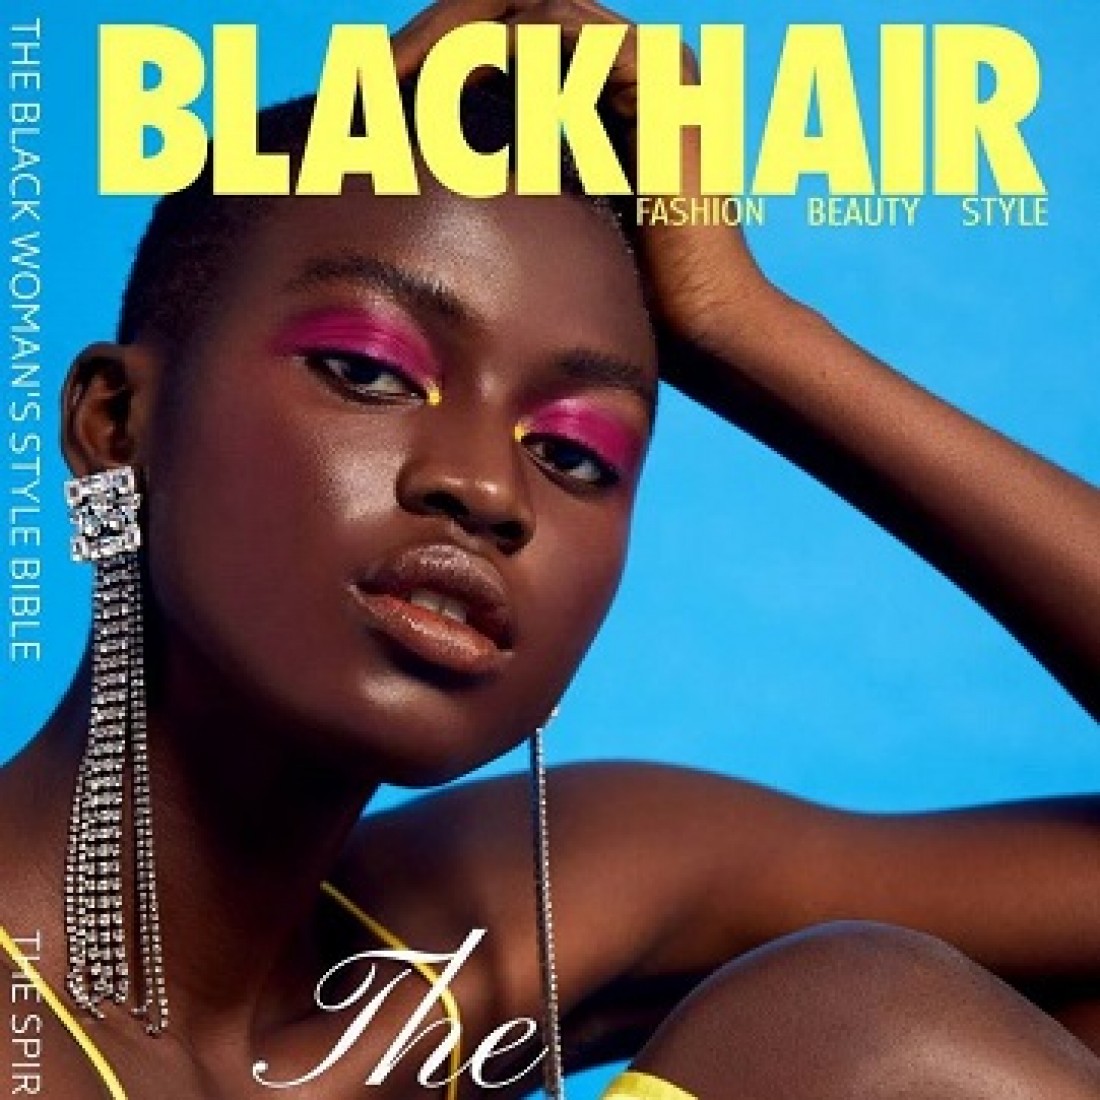 Black Hair (UK) Magazine Subscriber Services